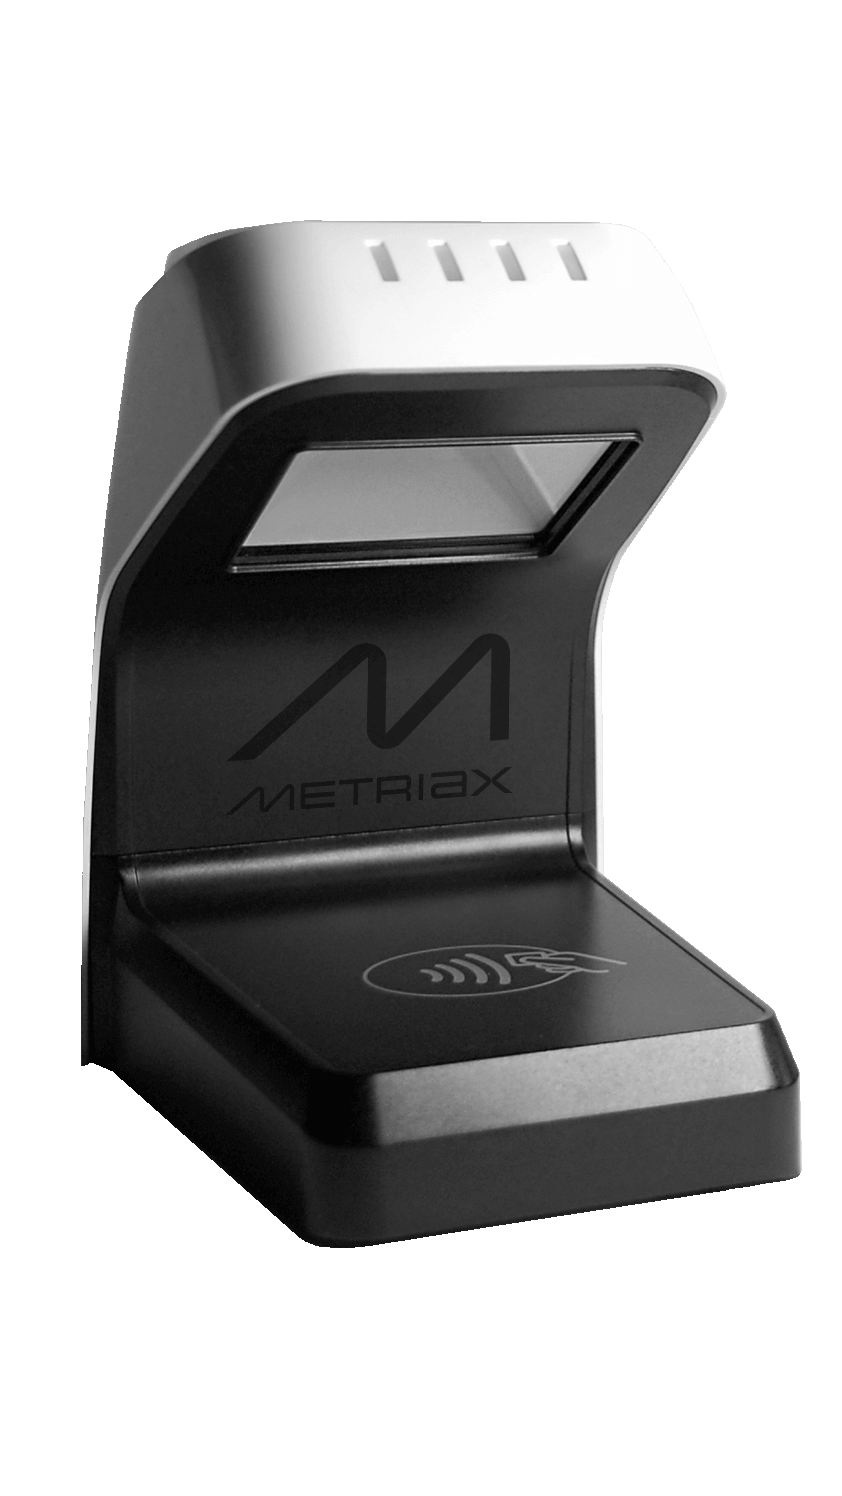 MDE-Combo-Metriax-RFID-NFC-Reader-Hybrid-QR code-Barode-EMV-Payment-writer-Mastercard-ewallet-device-hf-13,56mhz-mifare-desfire-ntag